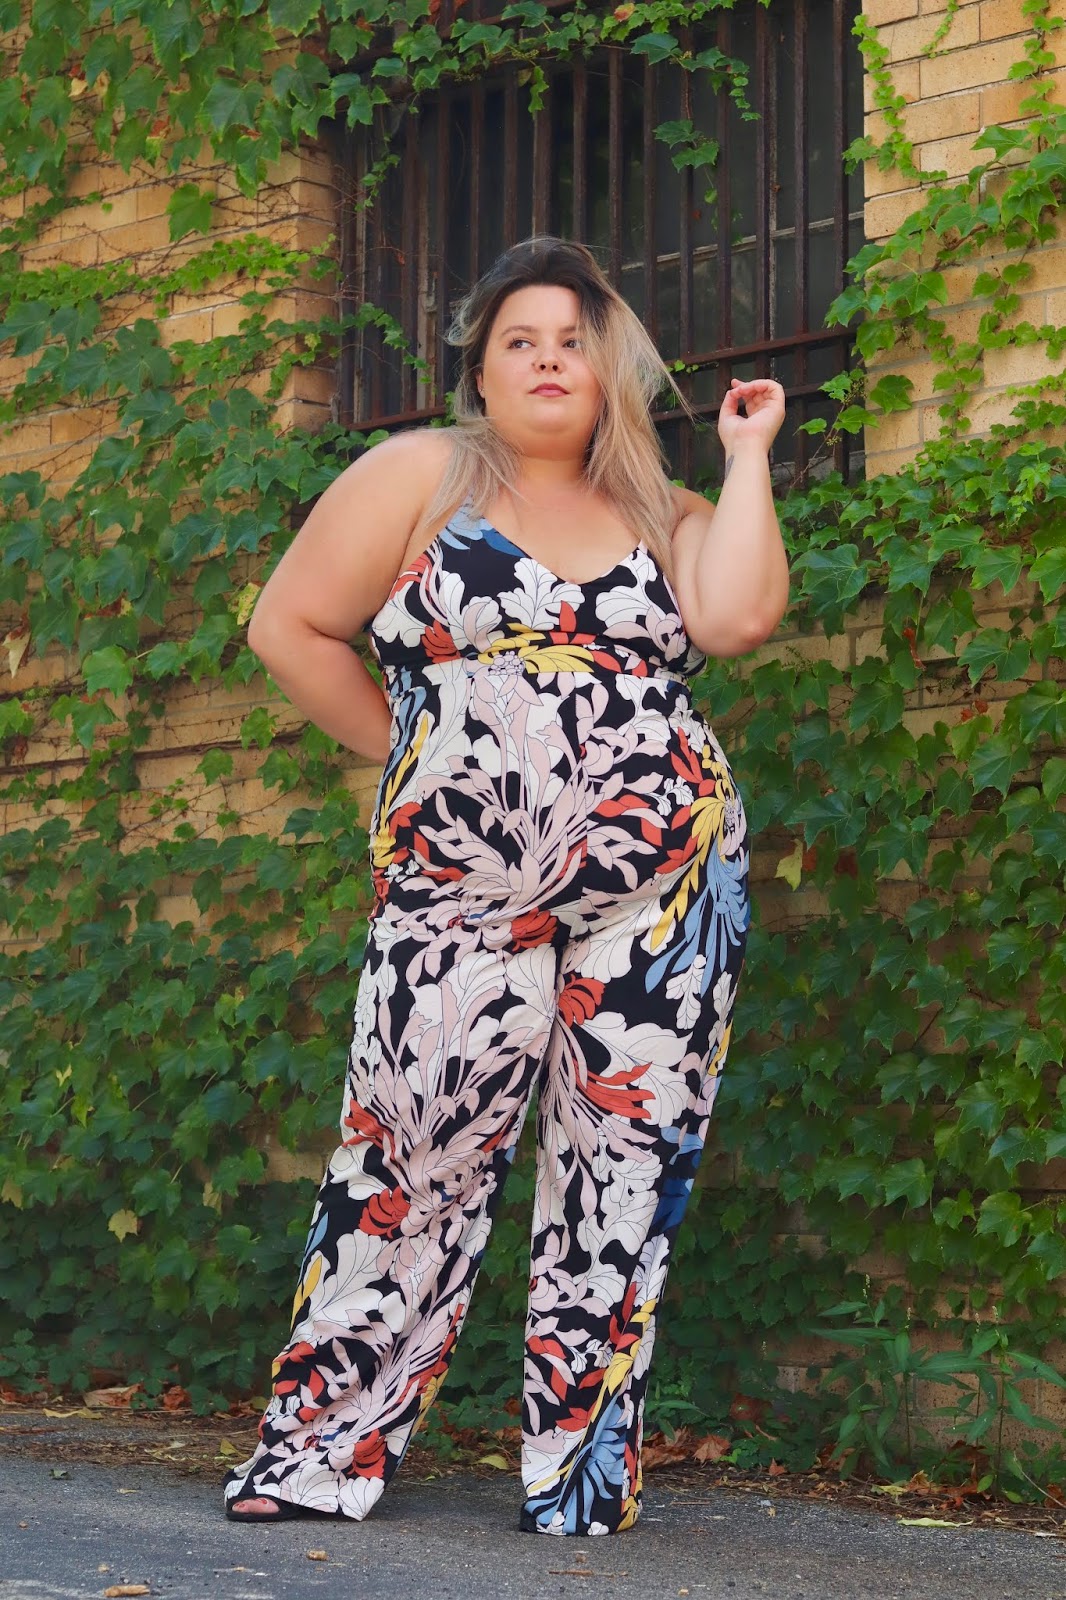 Chicago Plus Size Petite Fashion Blogger Natalie in the City, review's Fashion Nova's floral jumpsuits.